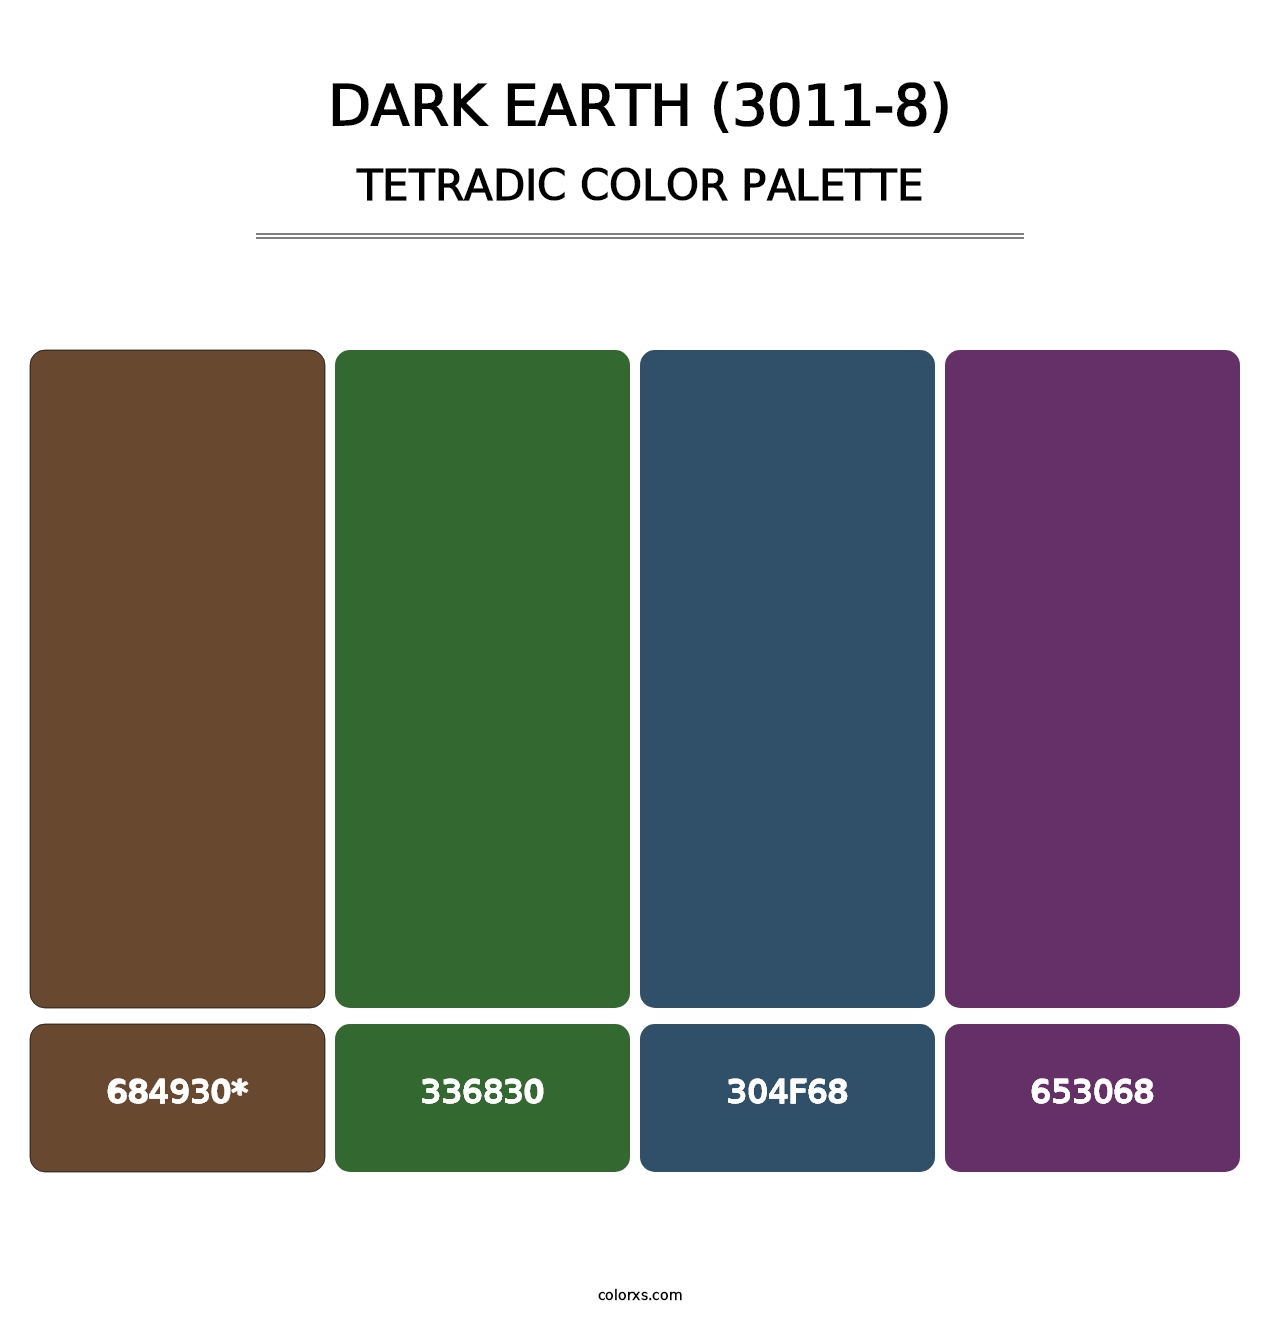 Dark Earth (3011-8) - Tetradic Color Palette